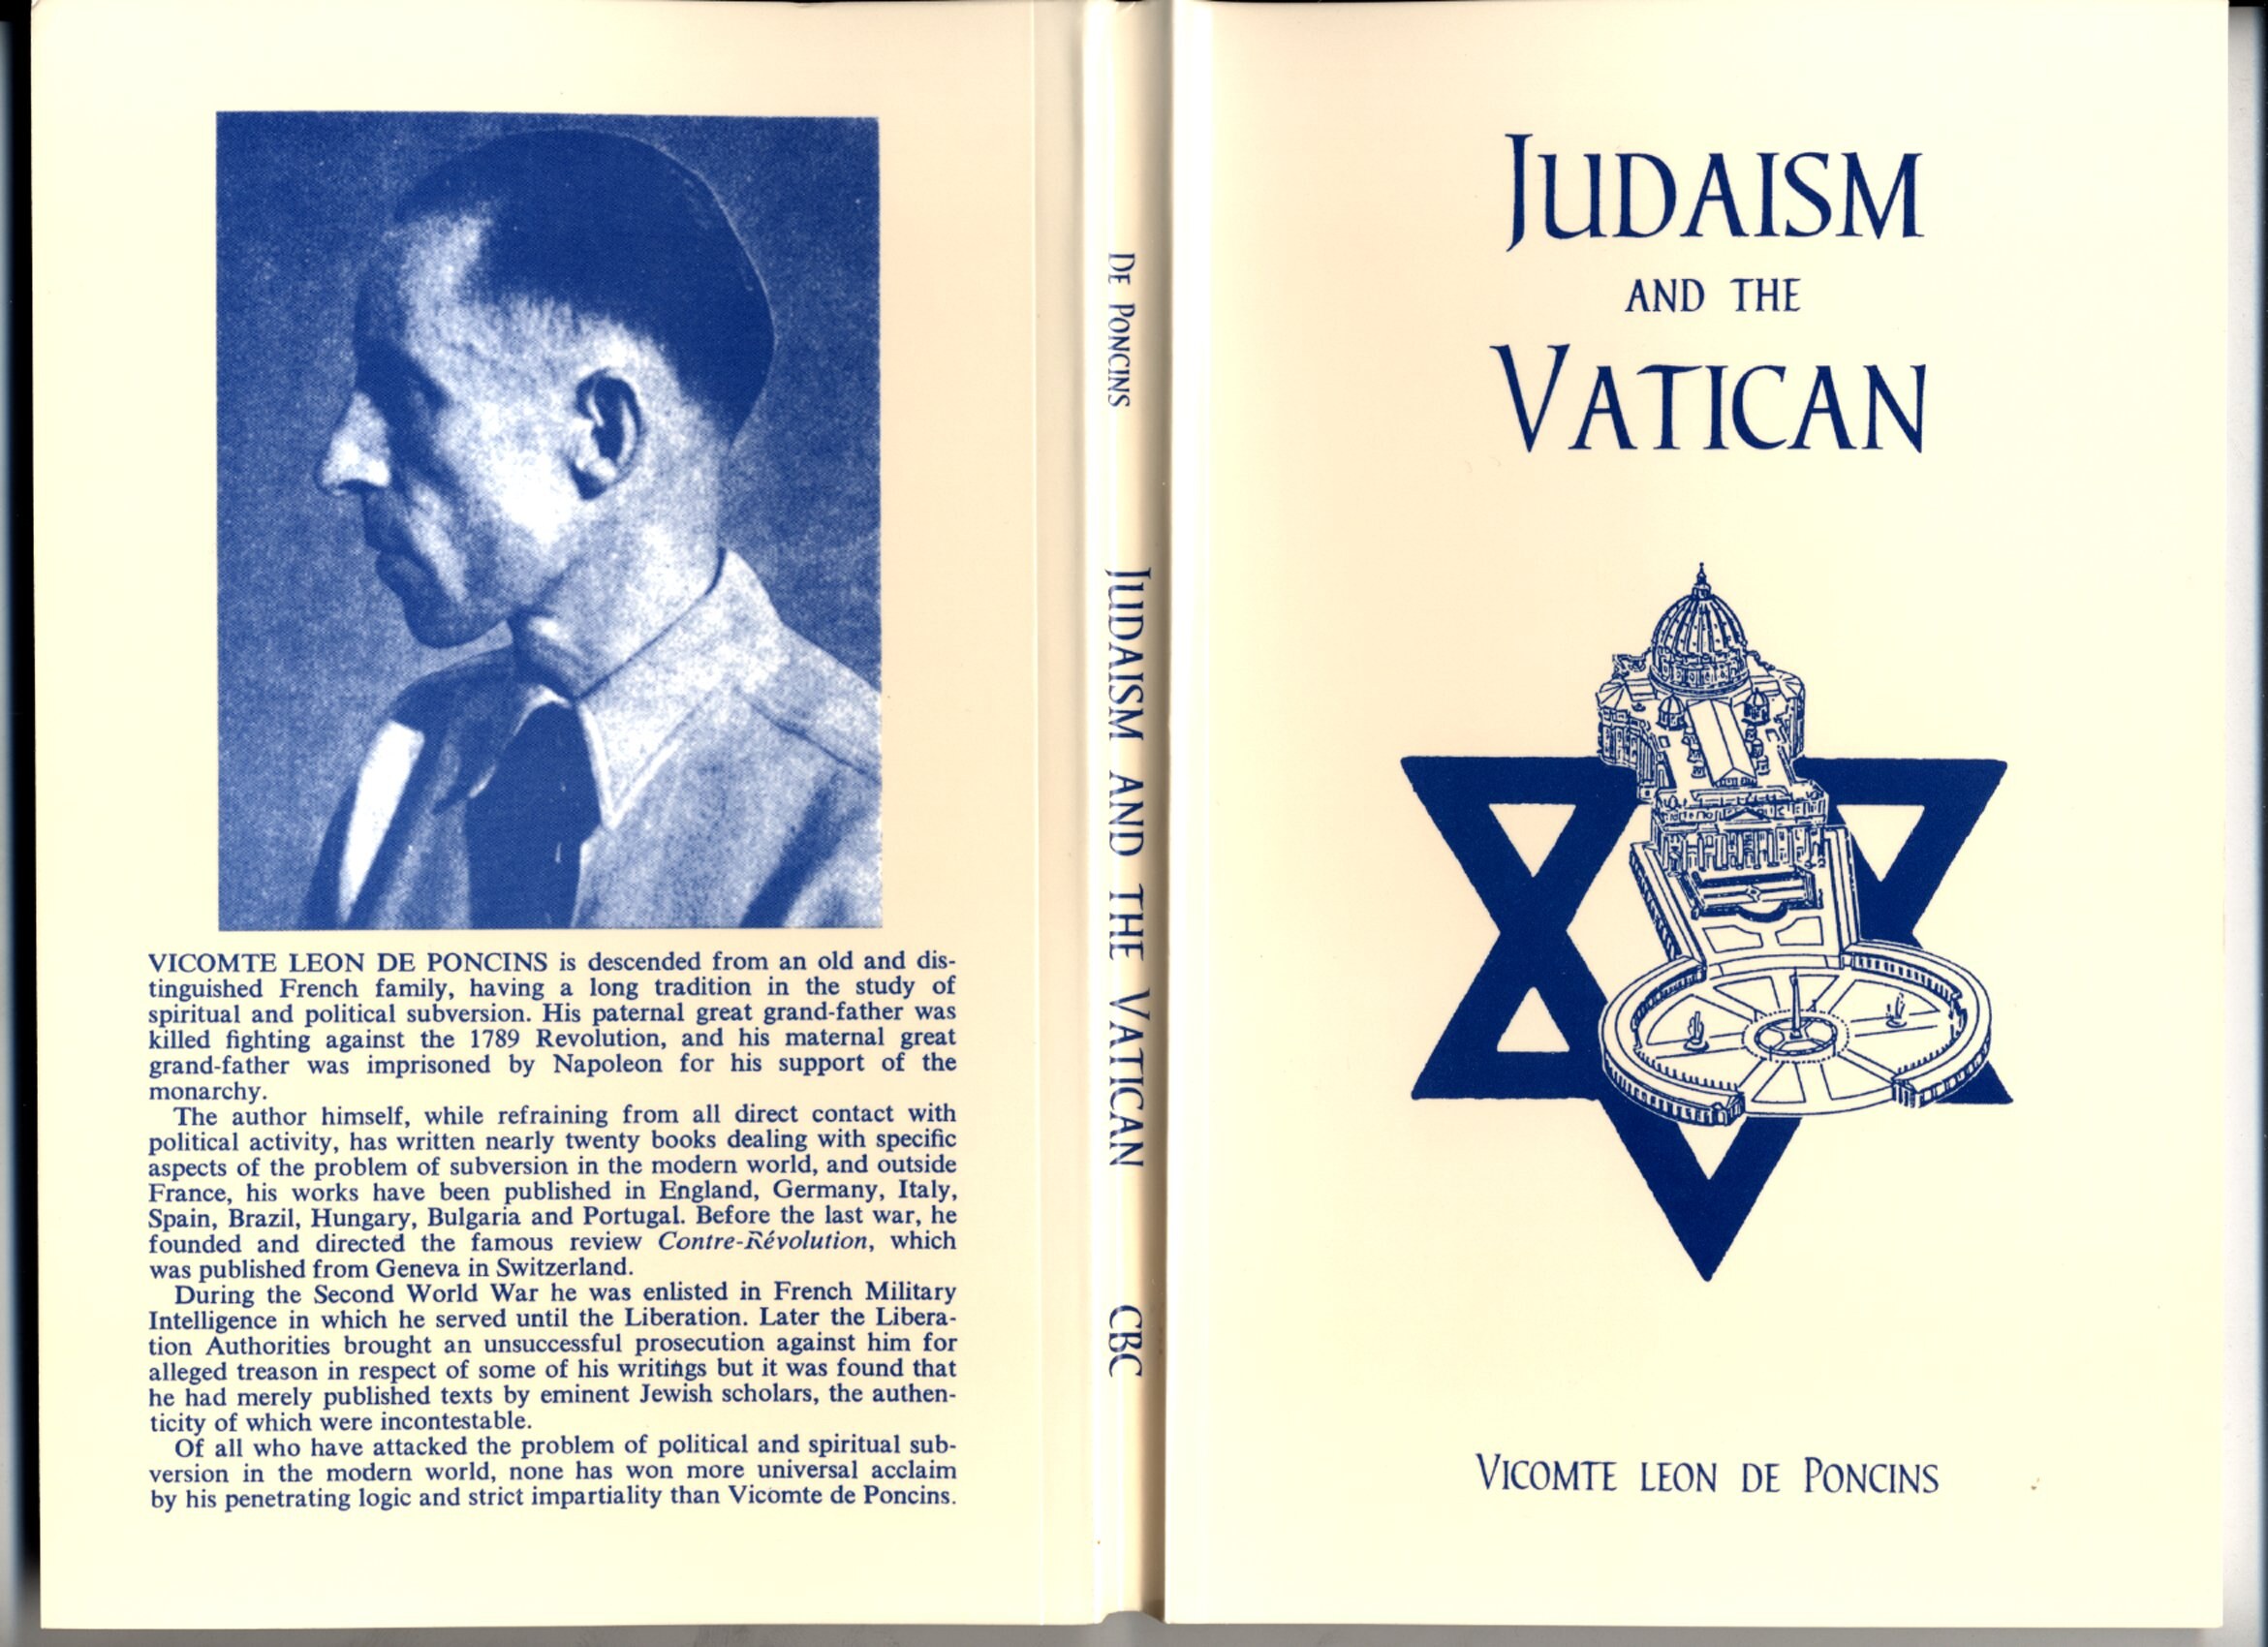 de Poncins, Leon; Judaism and the Vatican - An Attempt At Spiritual Subversion